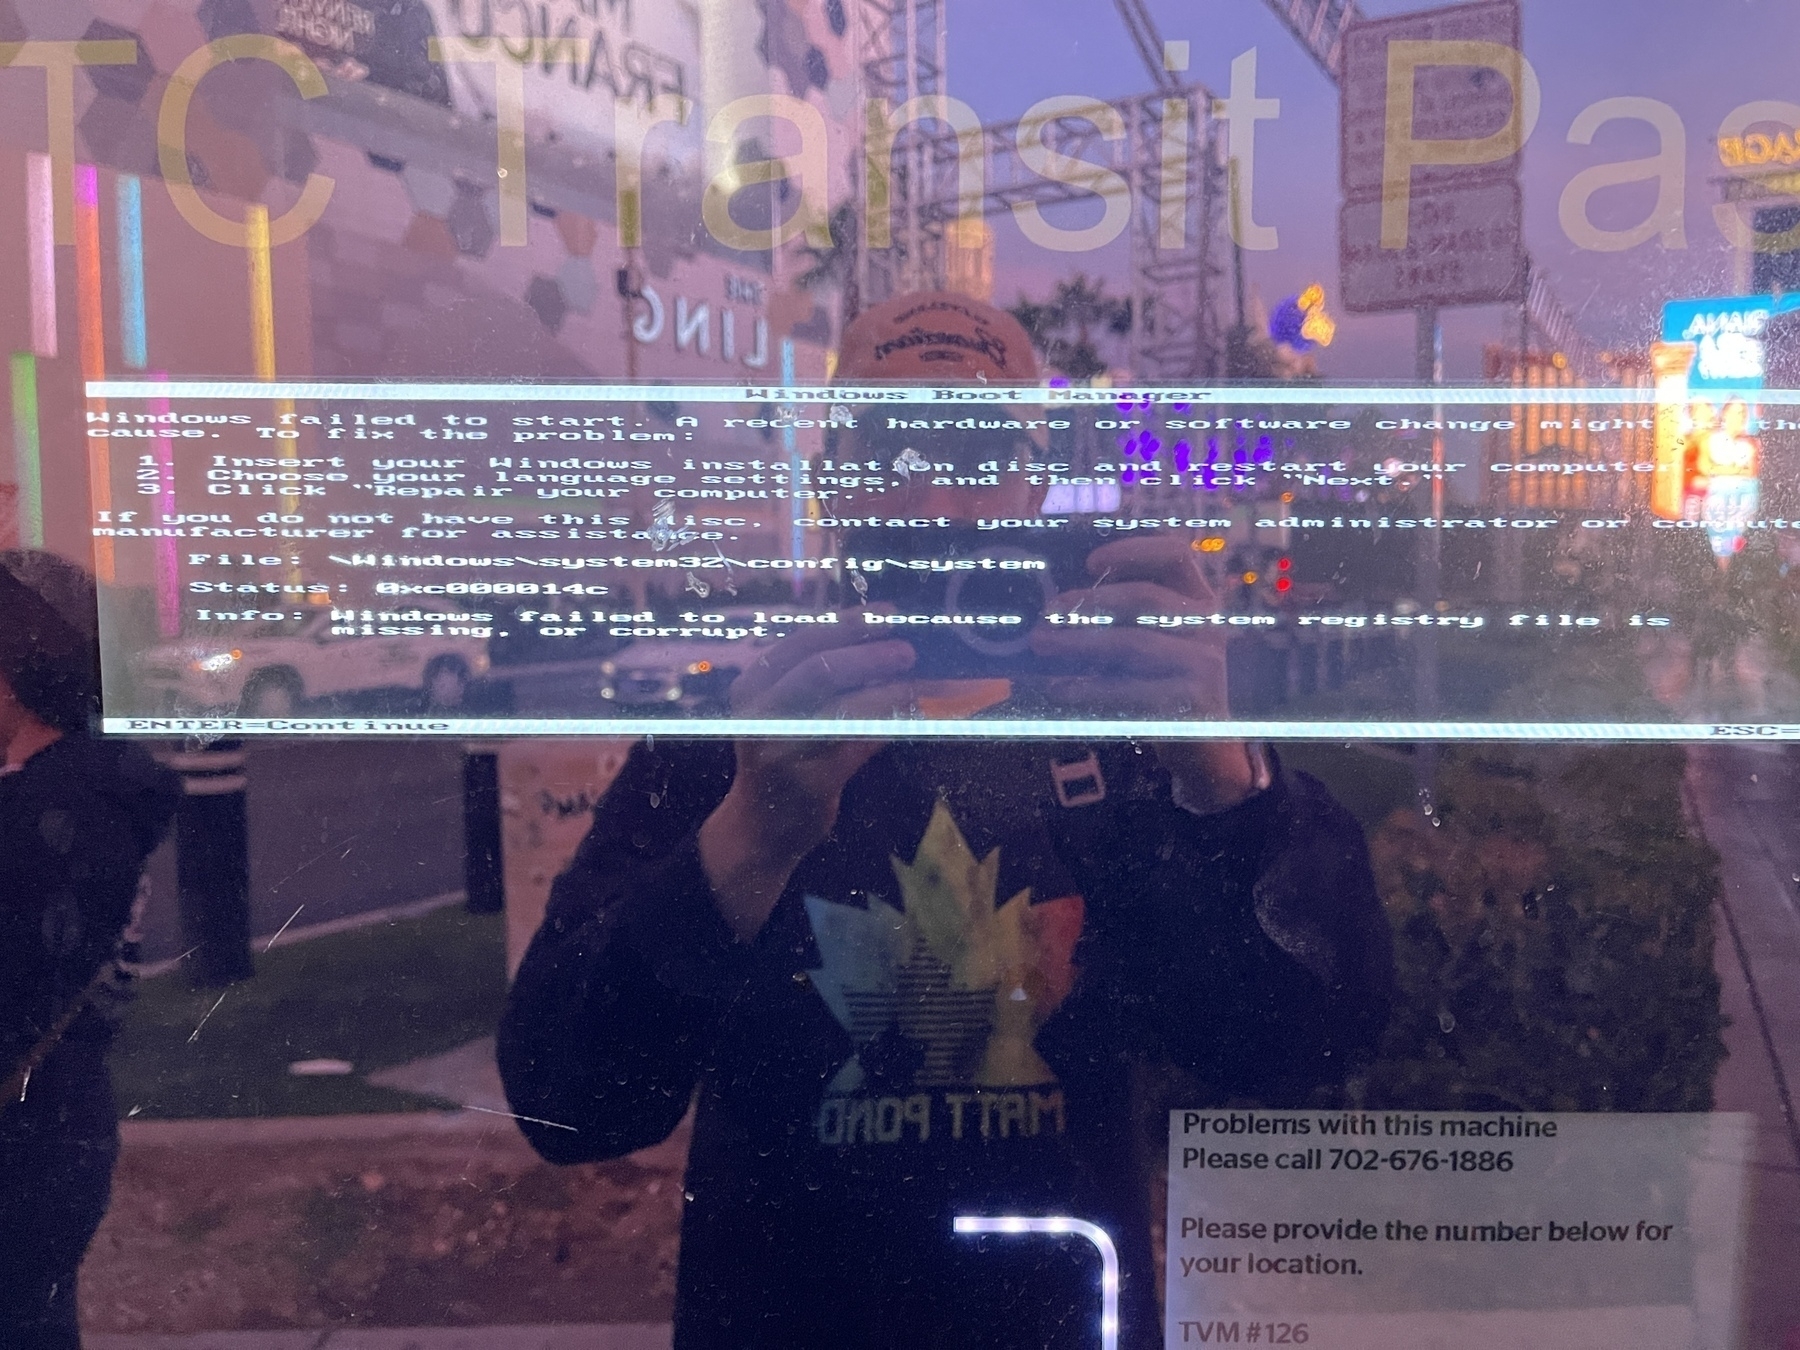 A windows boot error screen on a ticketing kiosk